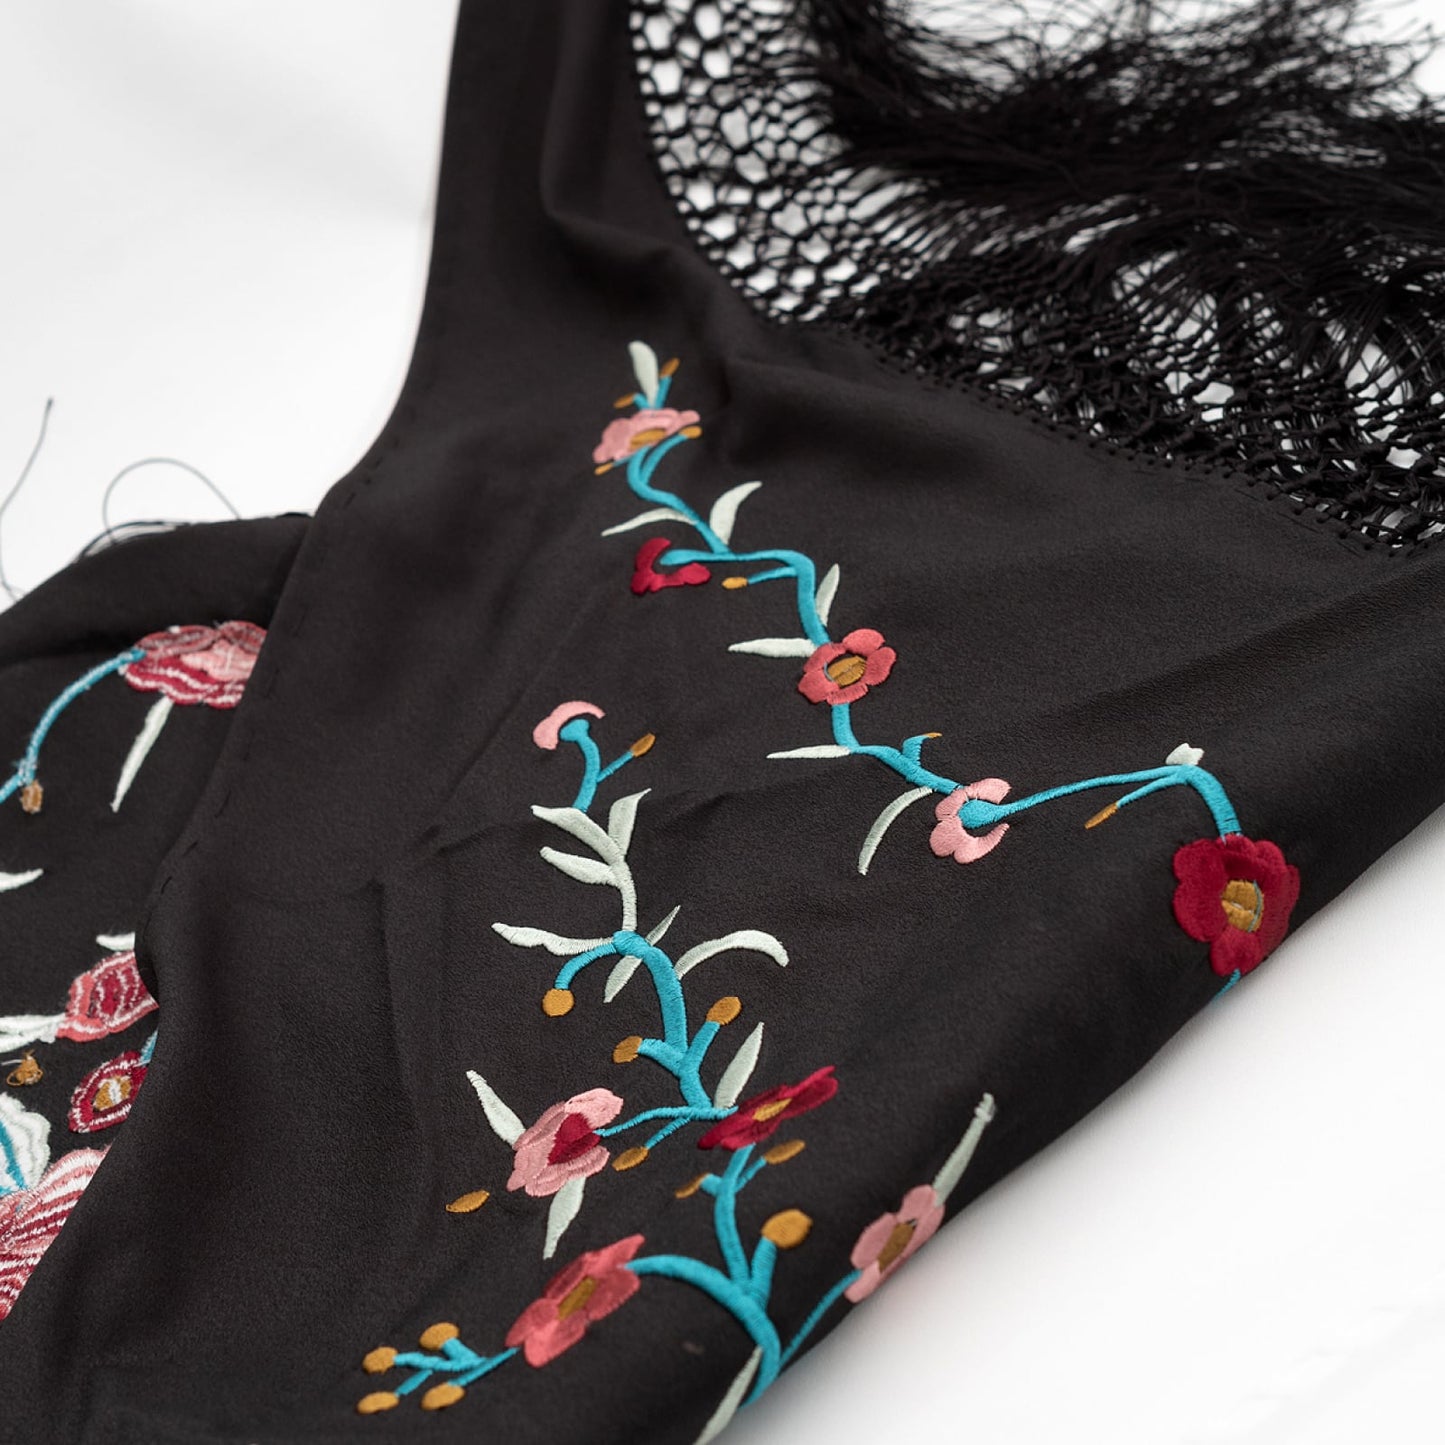 Black floral embroidered mantoncillo shawl.